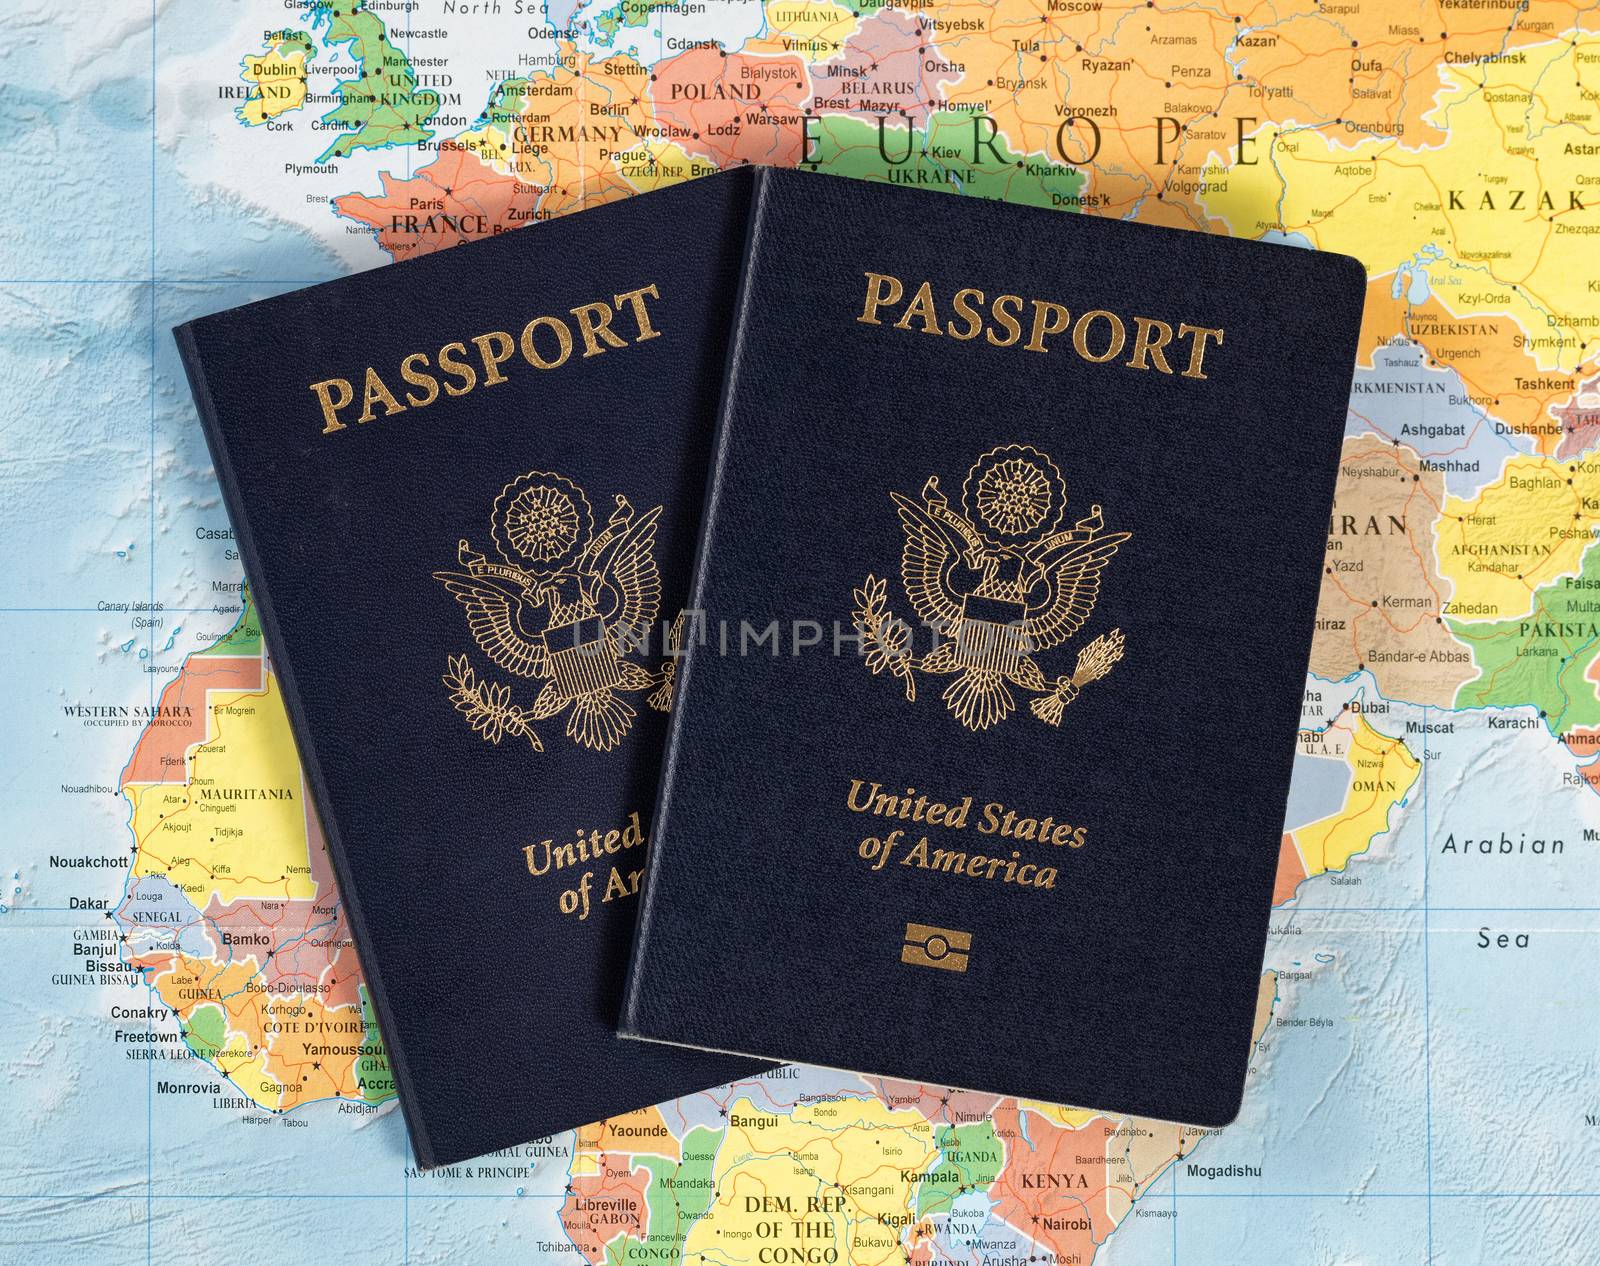 United States passport books for world travel 